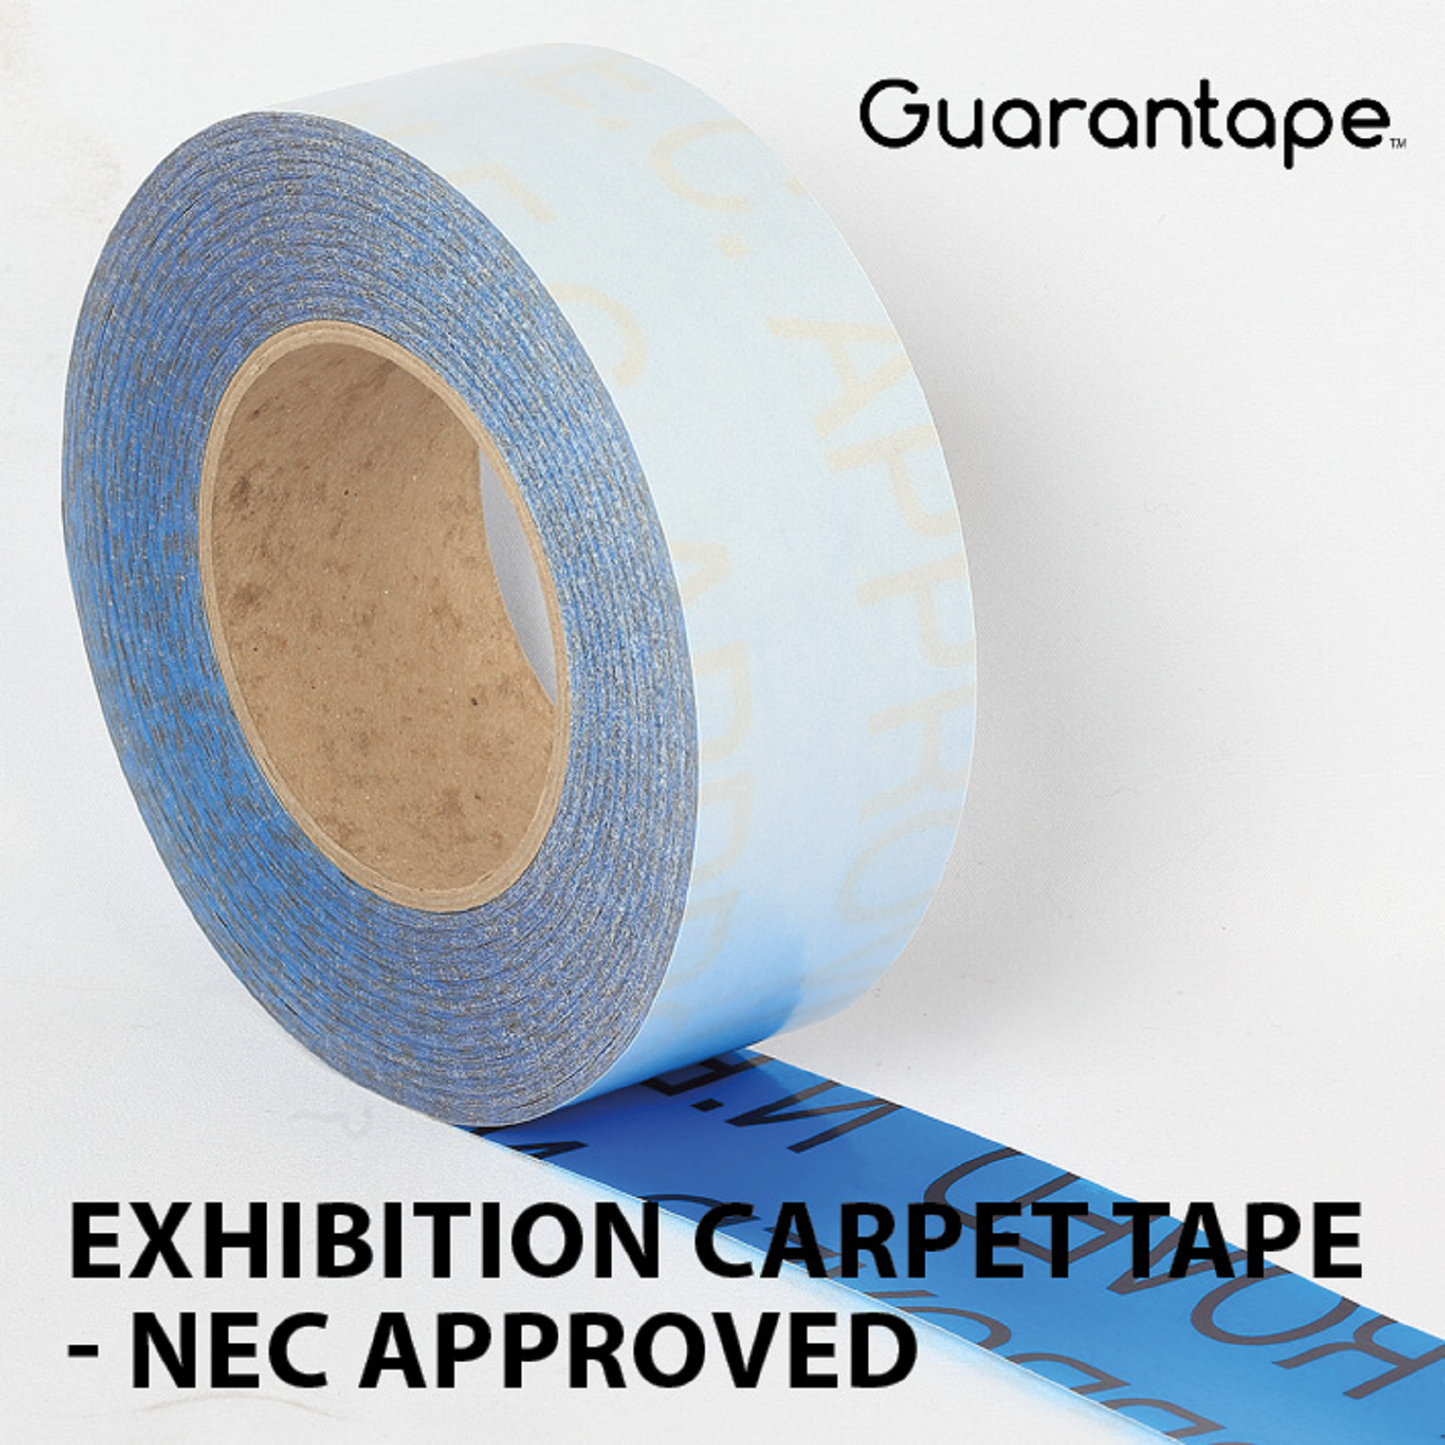 Guarantape Exhibition Carpet Tape